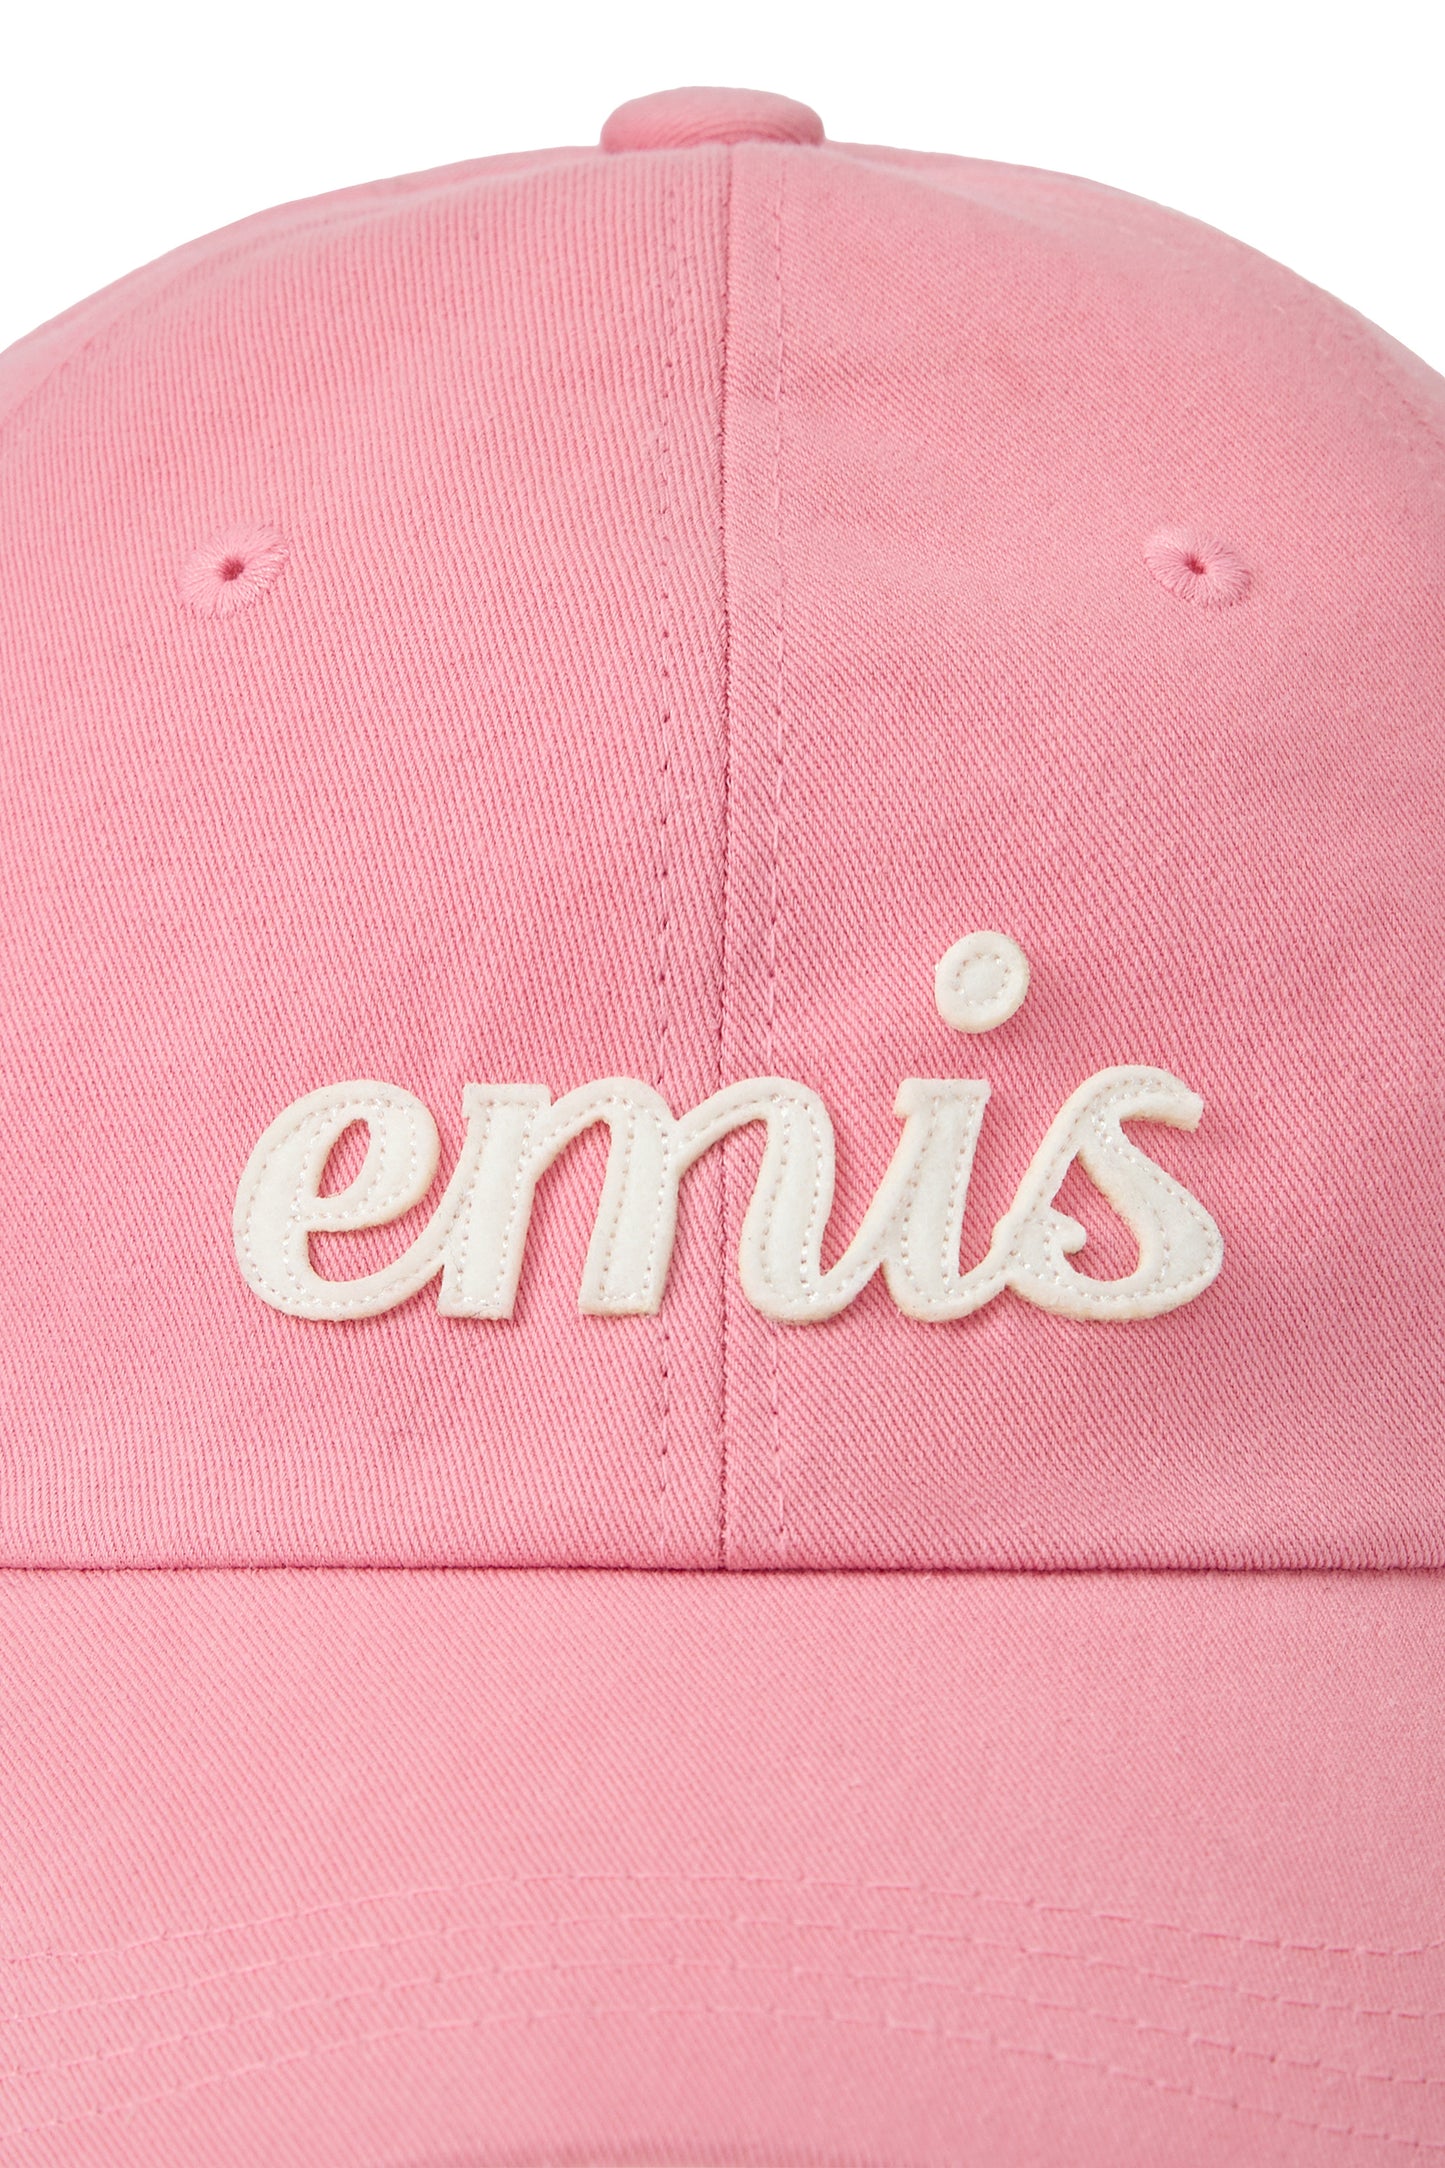 EMIS - APPLIQUE BALL CAP-PINK